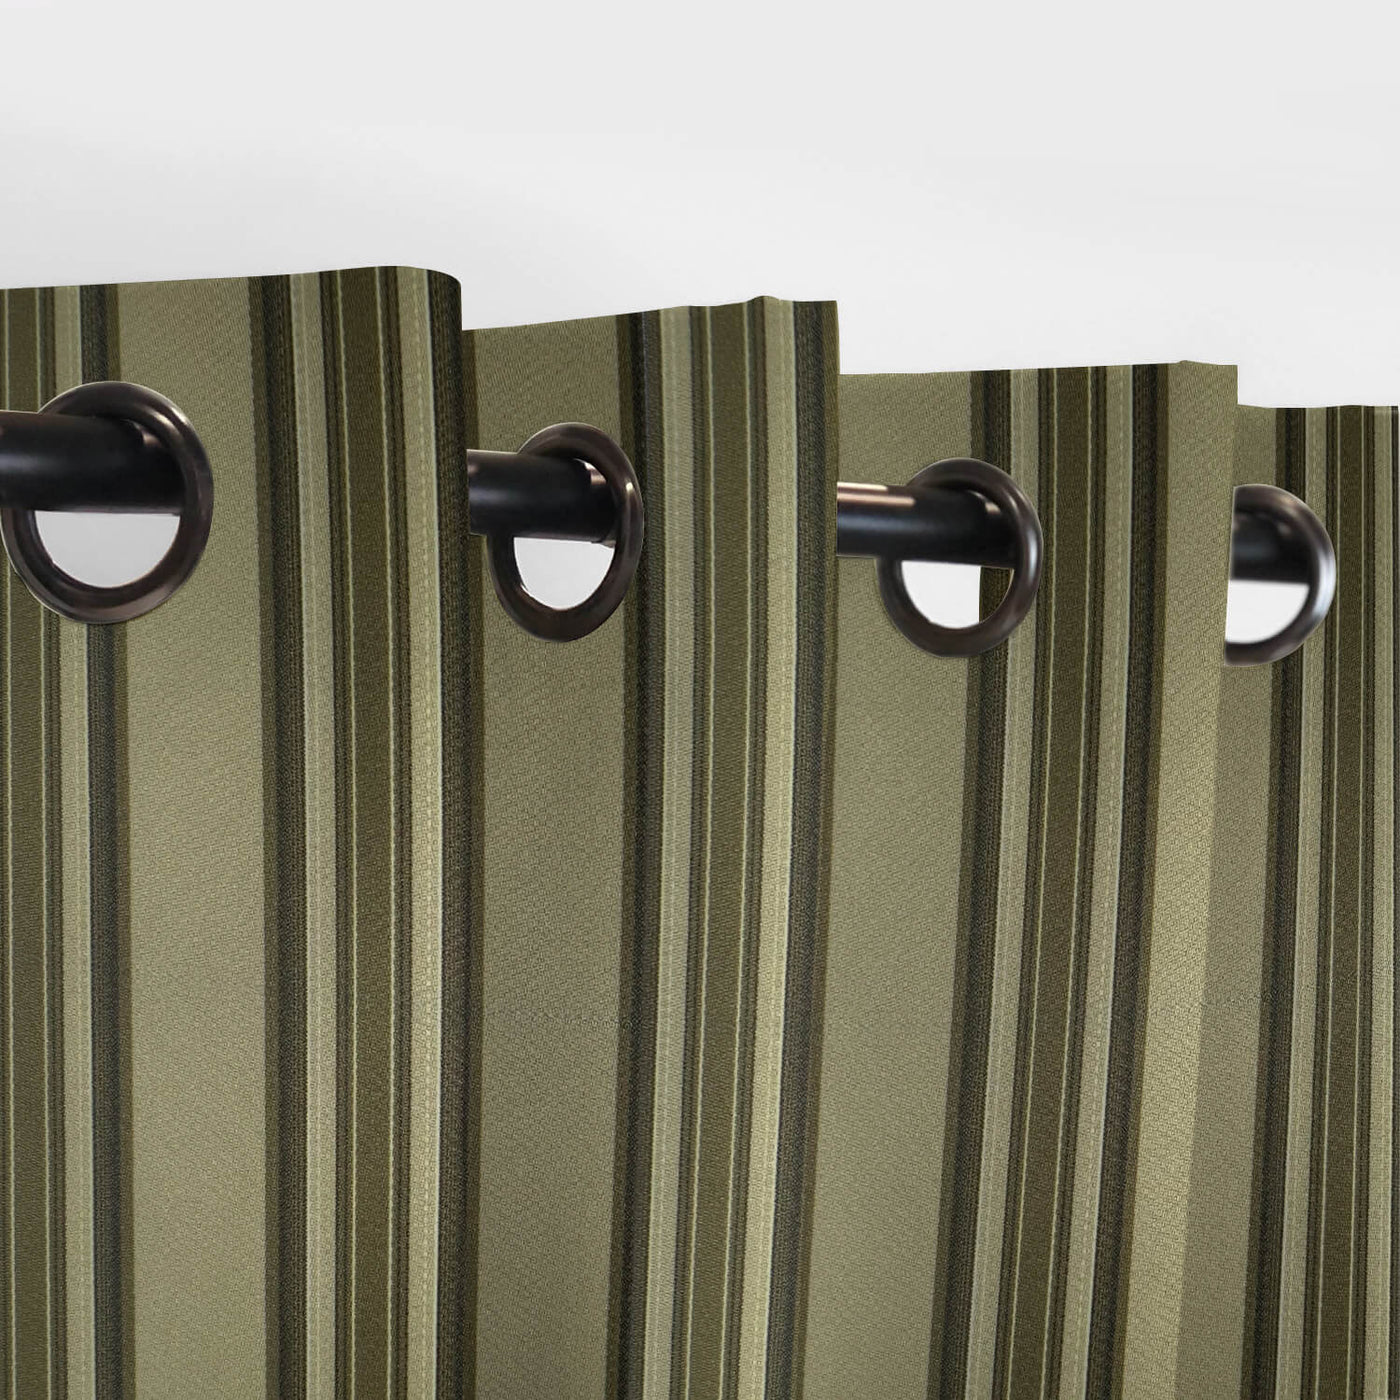 PENGI Outdoor Curtains Waterproof - Stripe Warm Sand